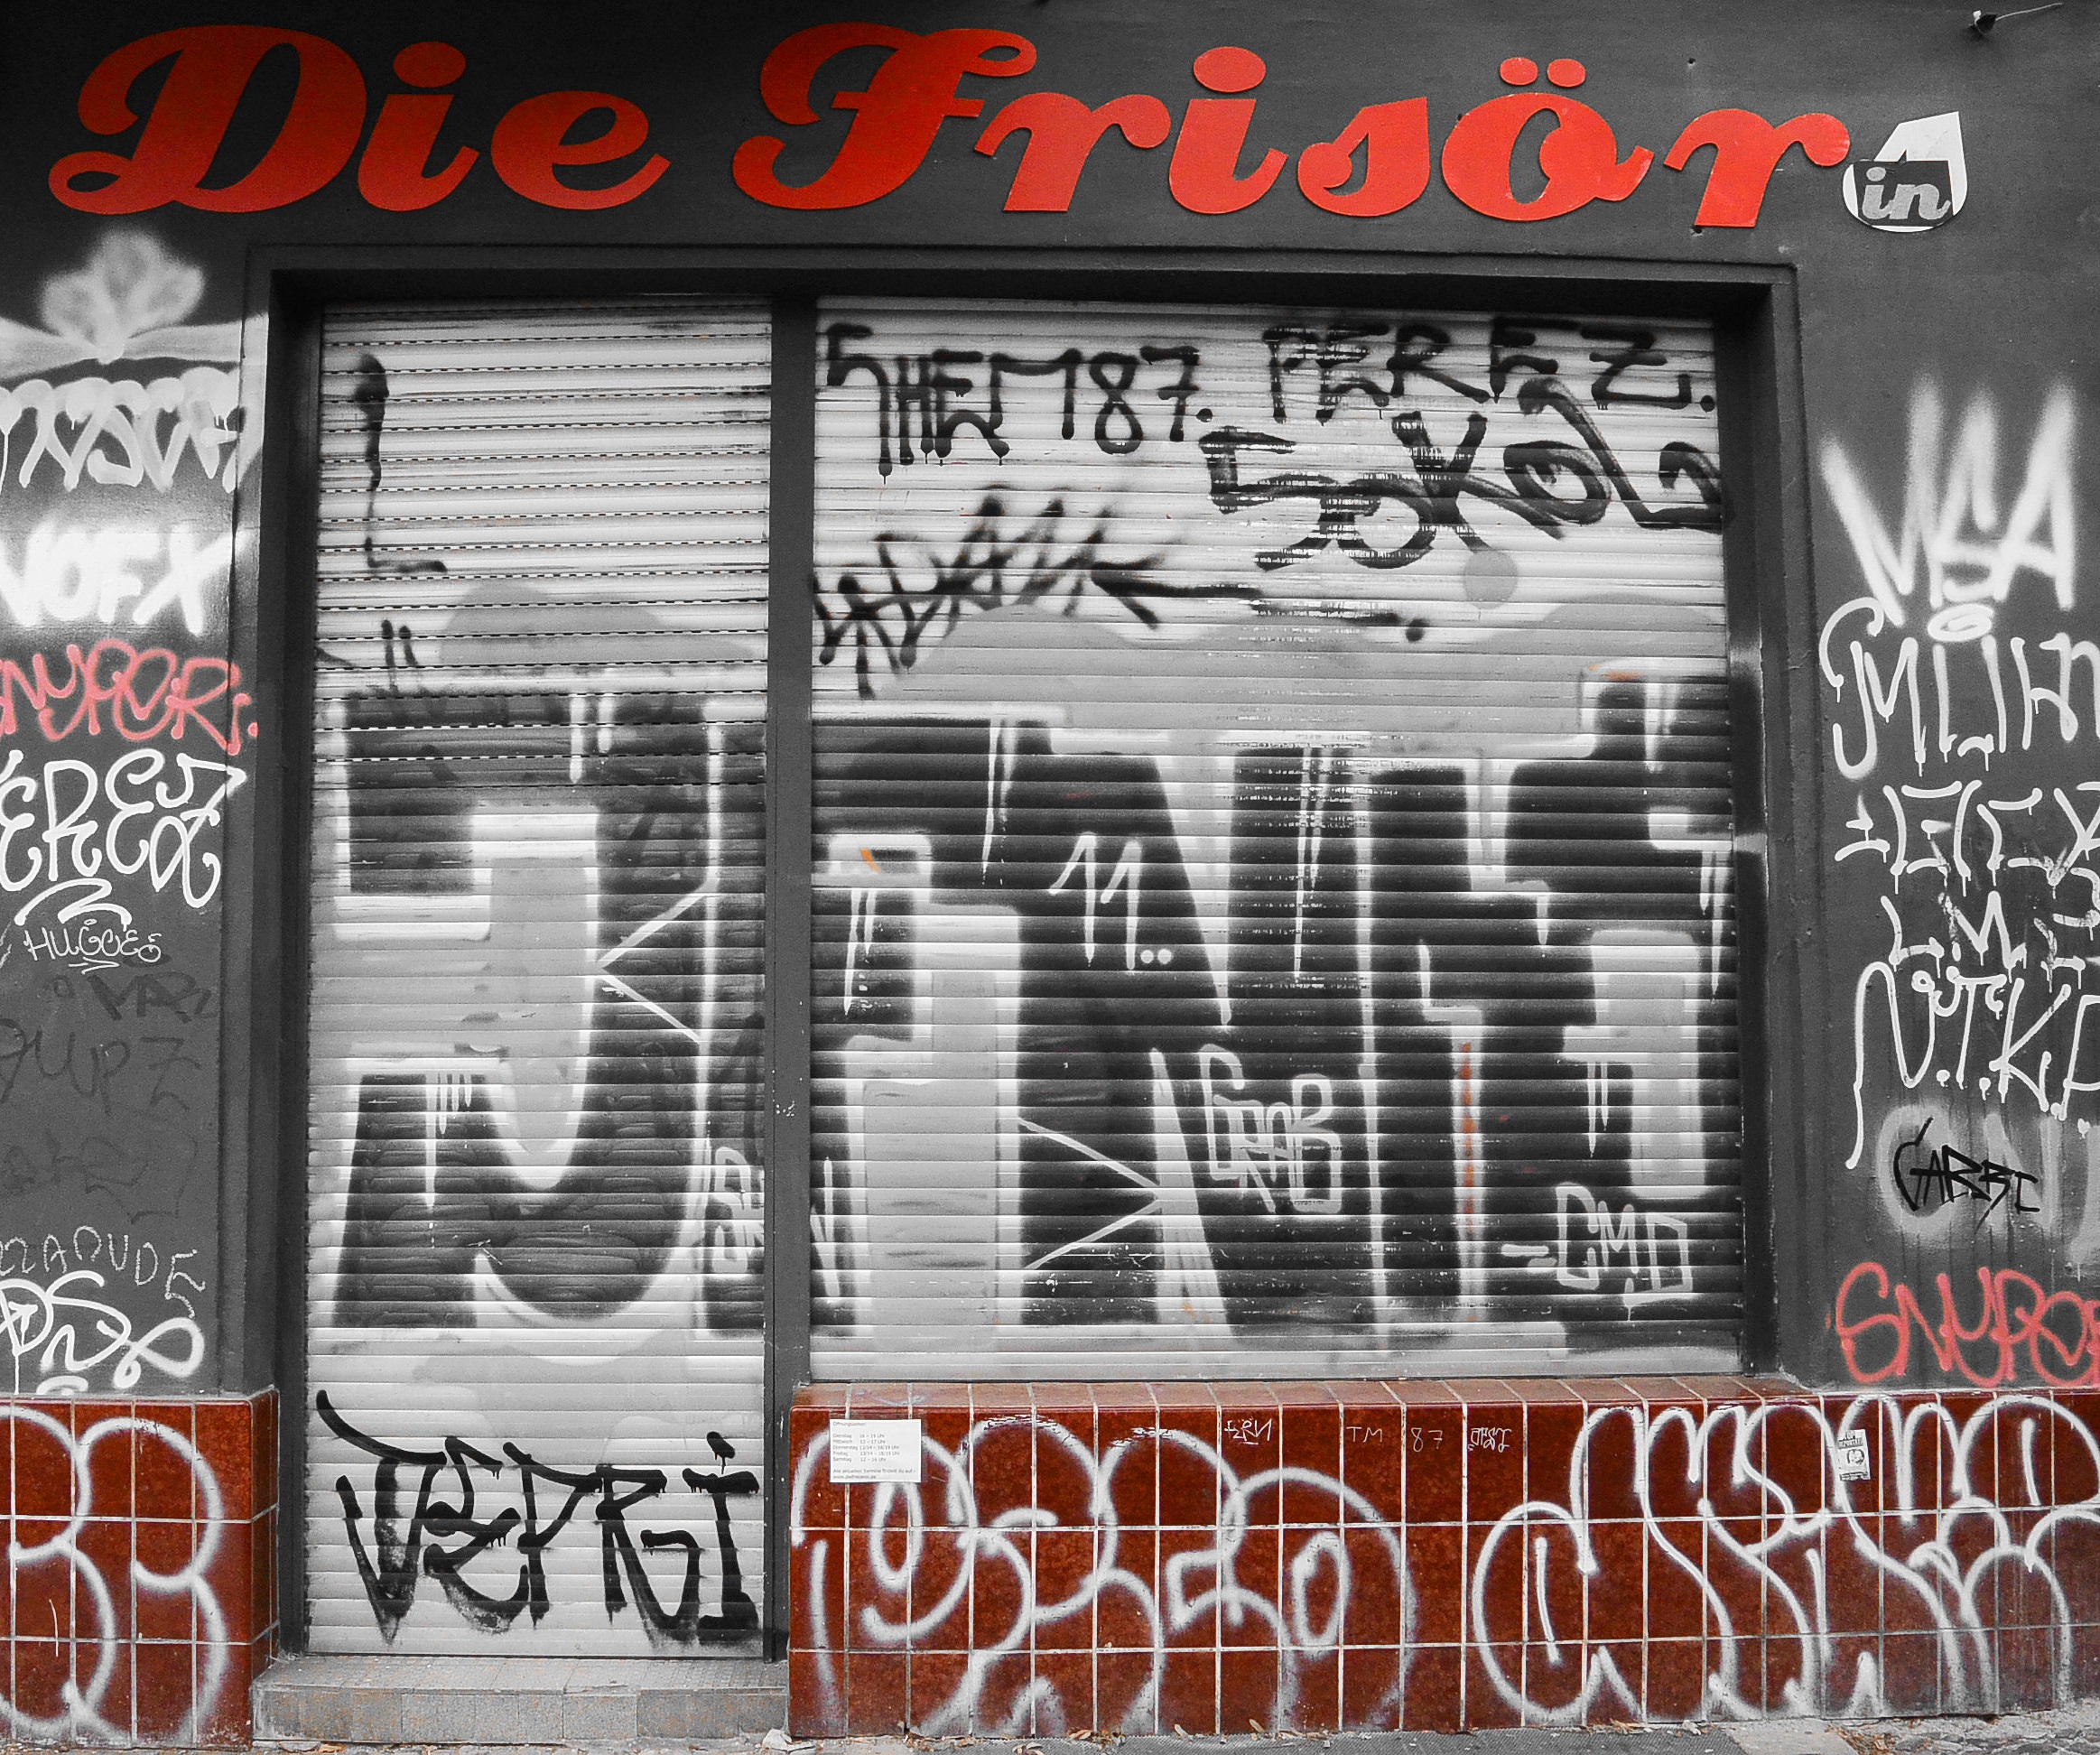 graffiti, street art, urban art, mural, sprayer, wall, graffiti wall